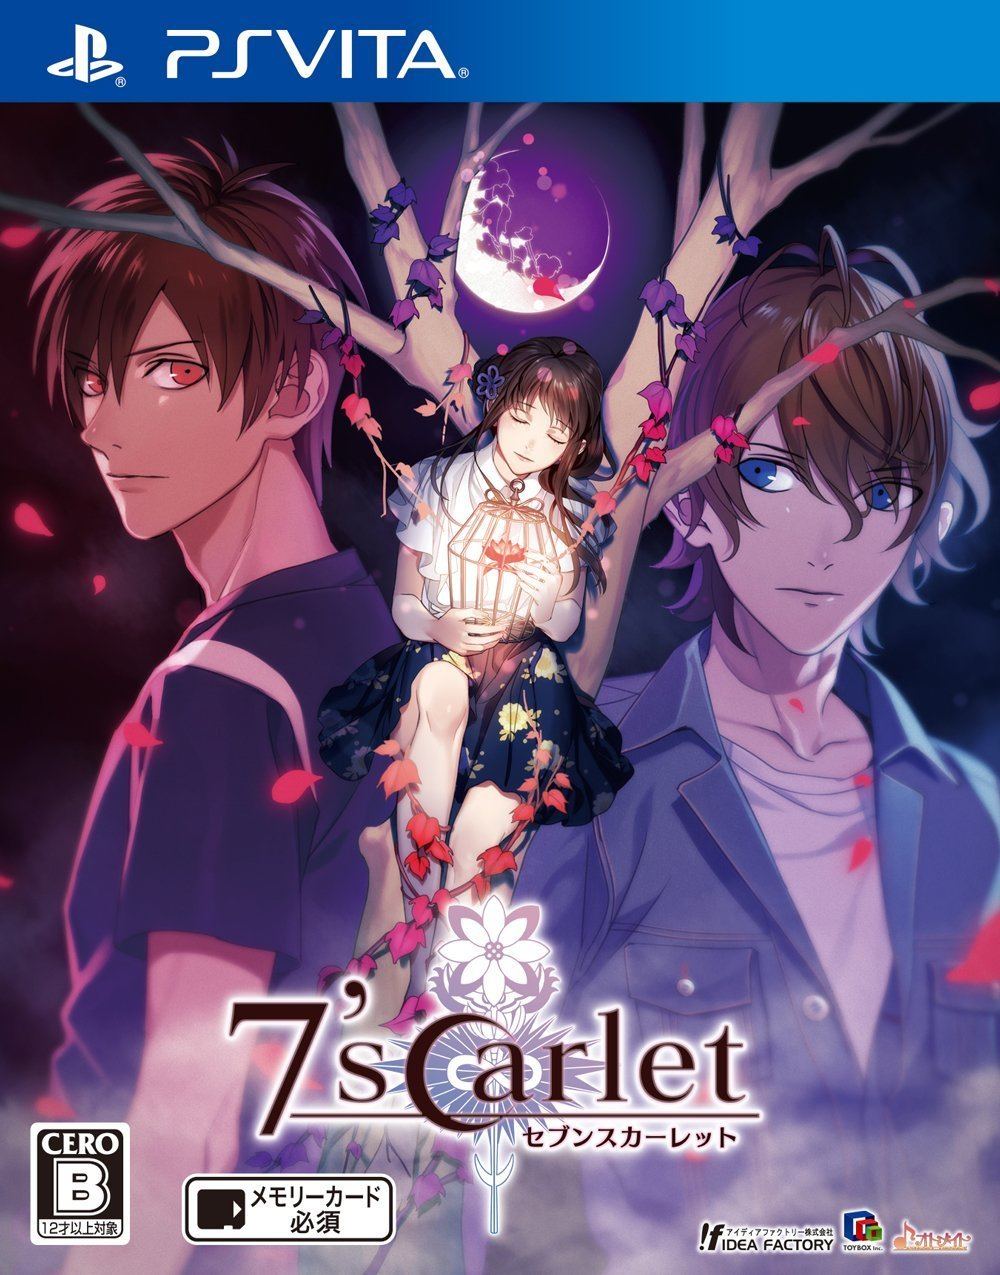 7'scarlet for PlayStation Vita